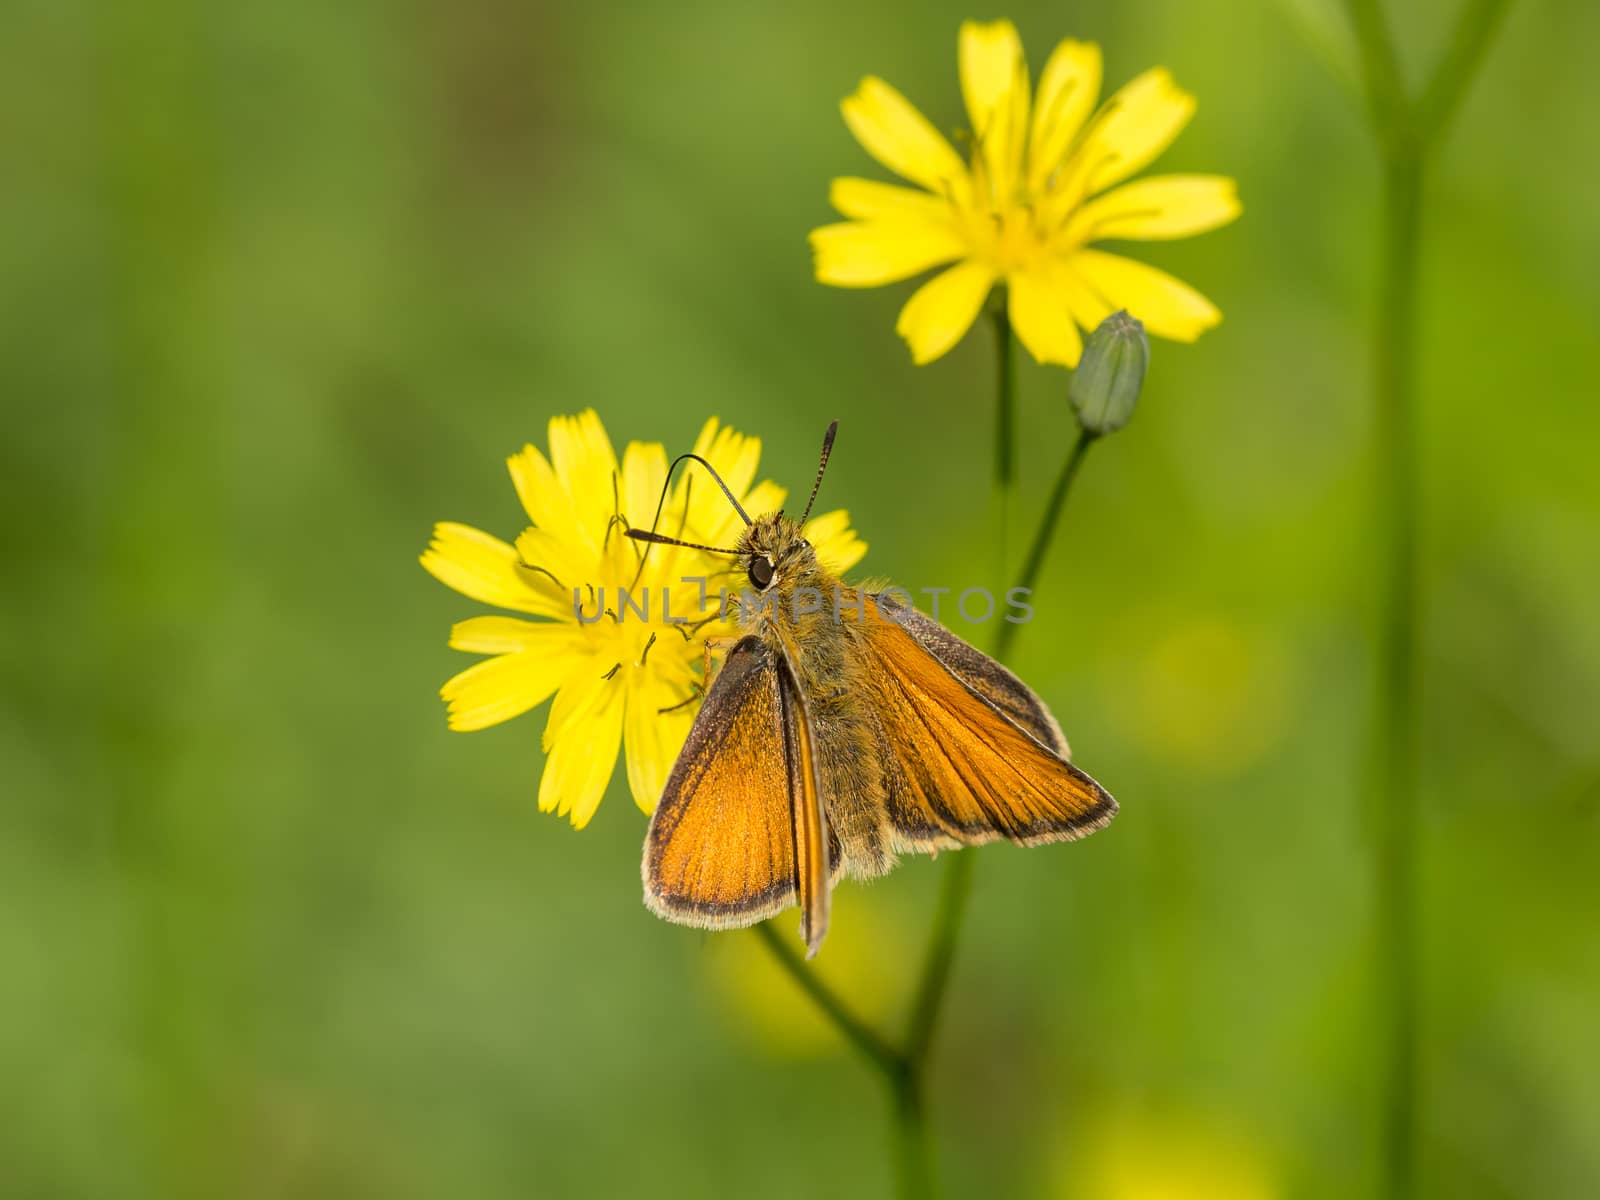 Wild orange moth on yellow flower by frankhoekzema